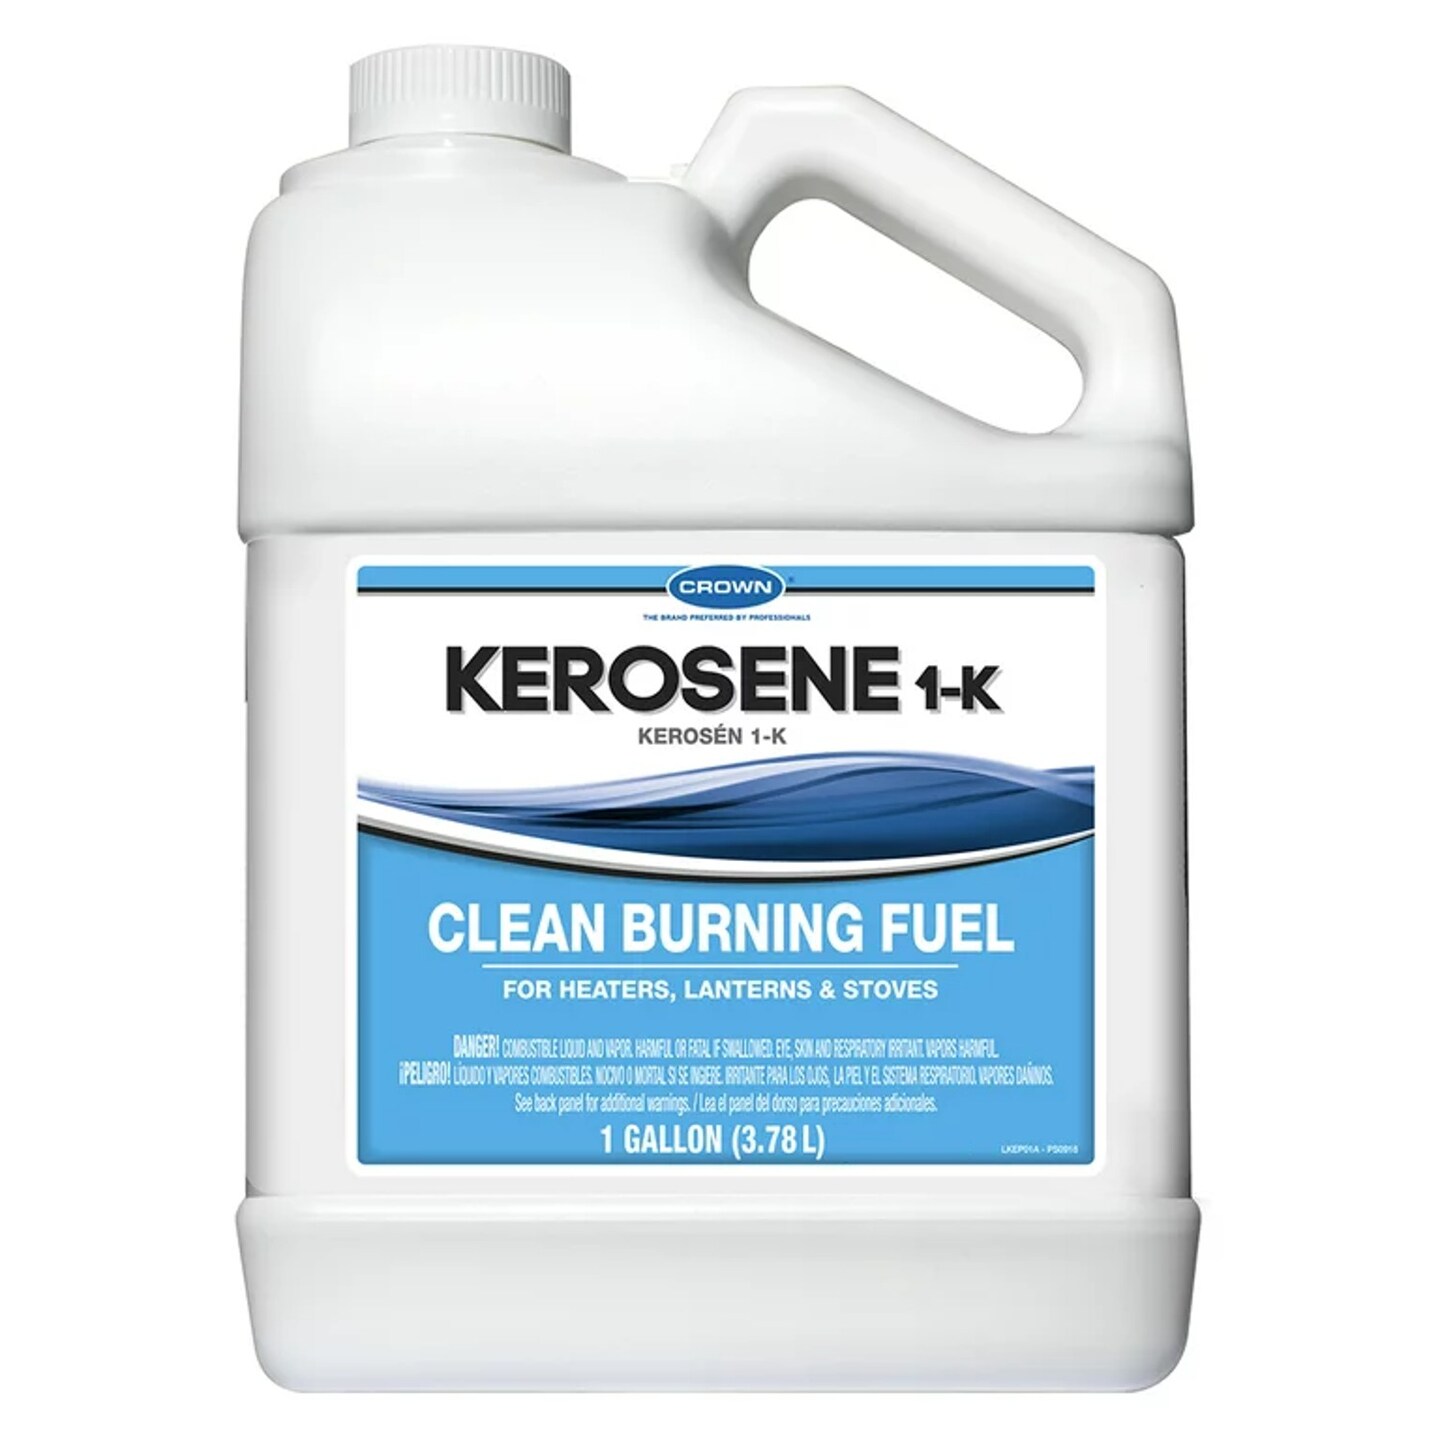 Crown K-1 Grade Kerosene, 1 Gallon Clean Burning Fuel